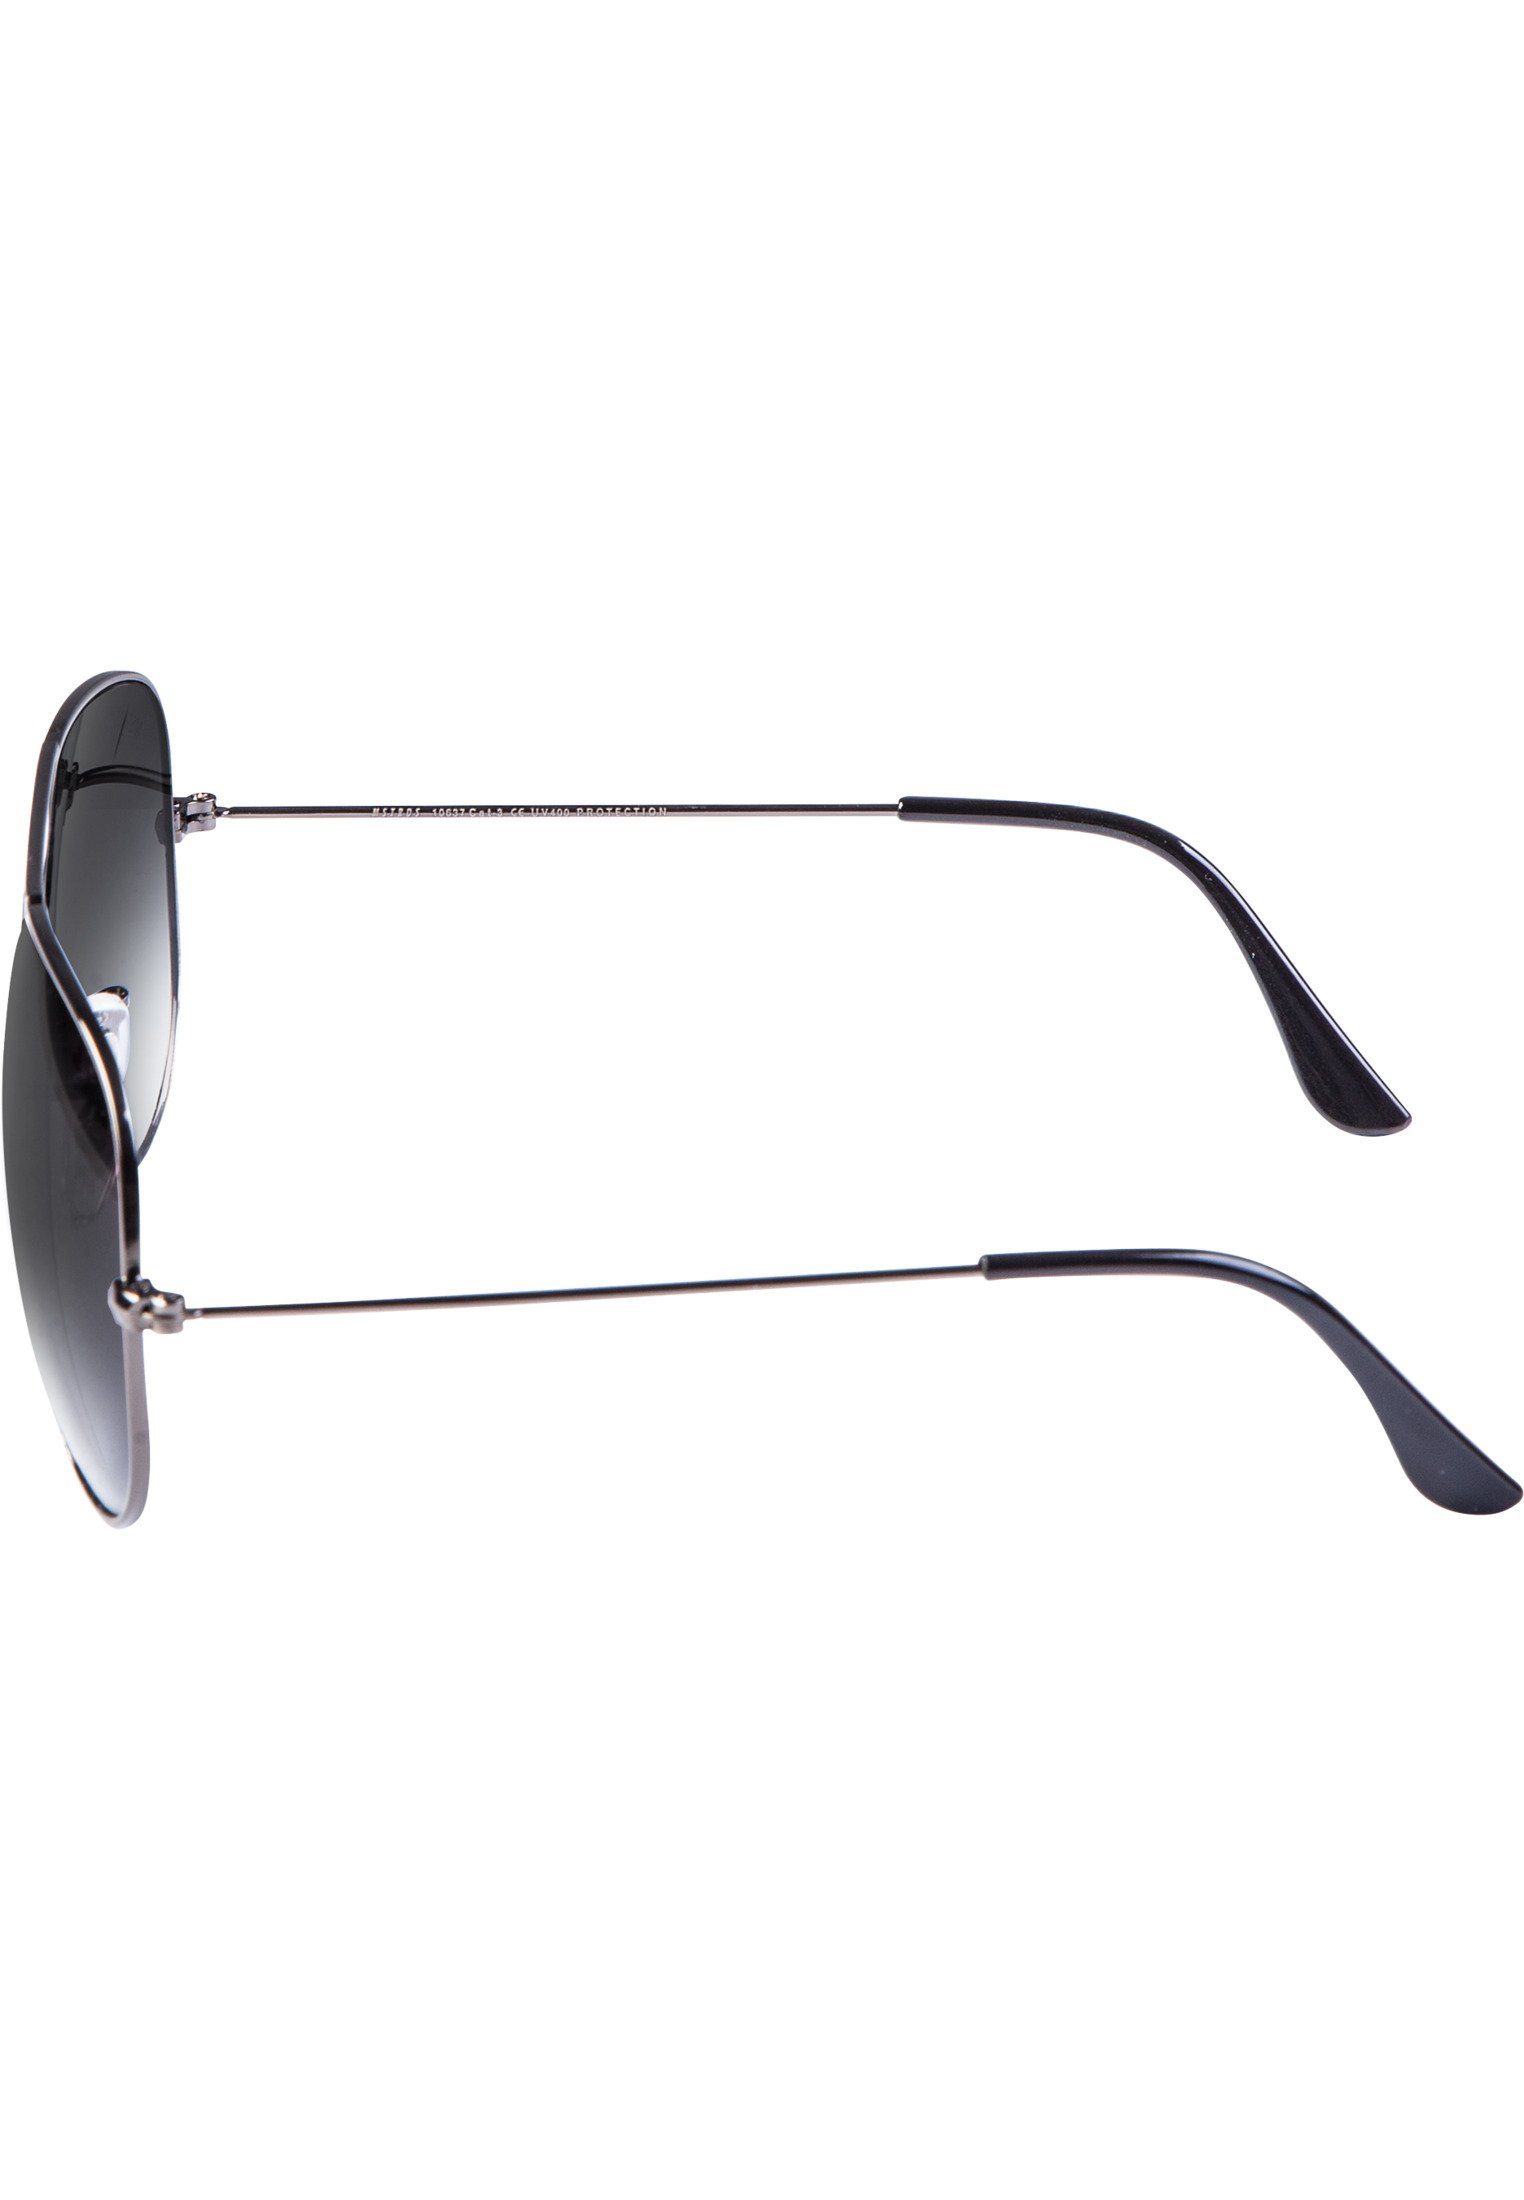 MSTRDS Sonnenbrille Accessoires PureAv Sunglasses gun/grey Youth